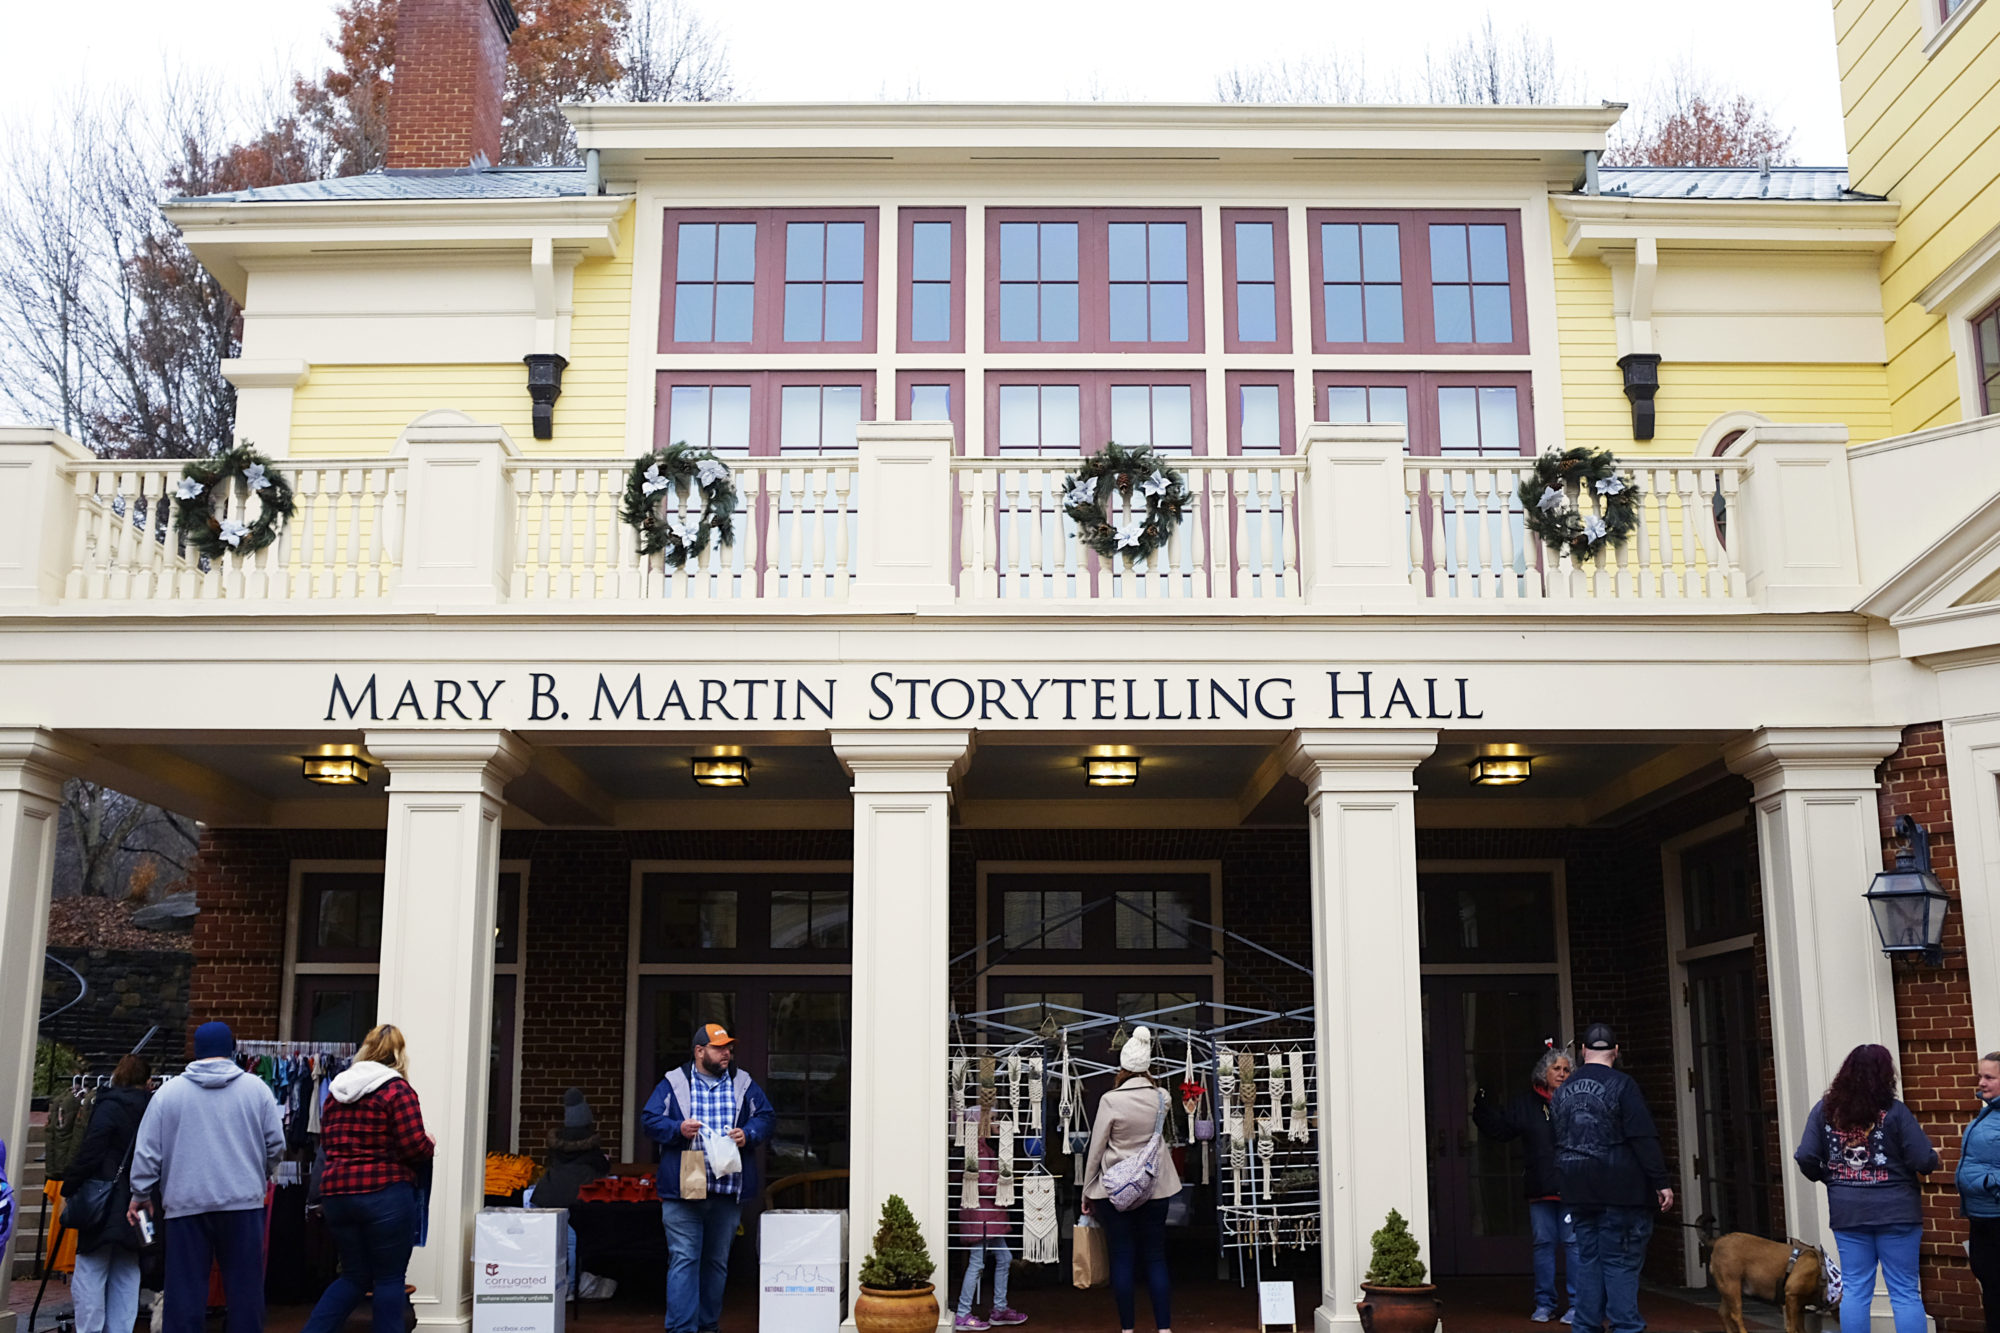 Outside the Mary R. Martin Storytelling Hall in Jonesborough